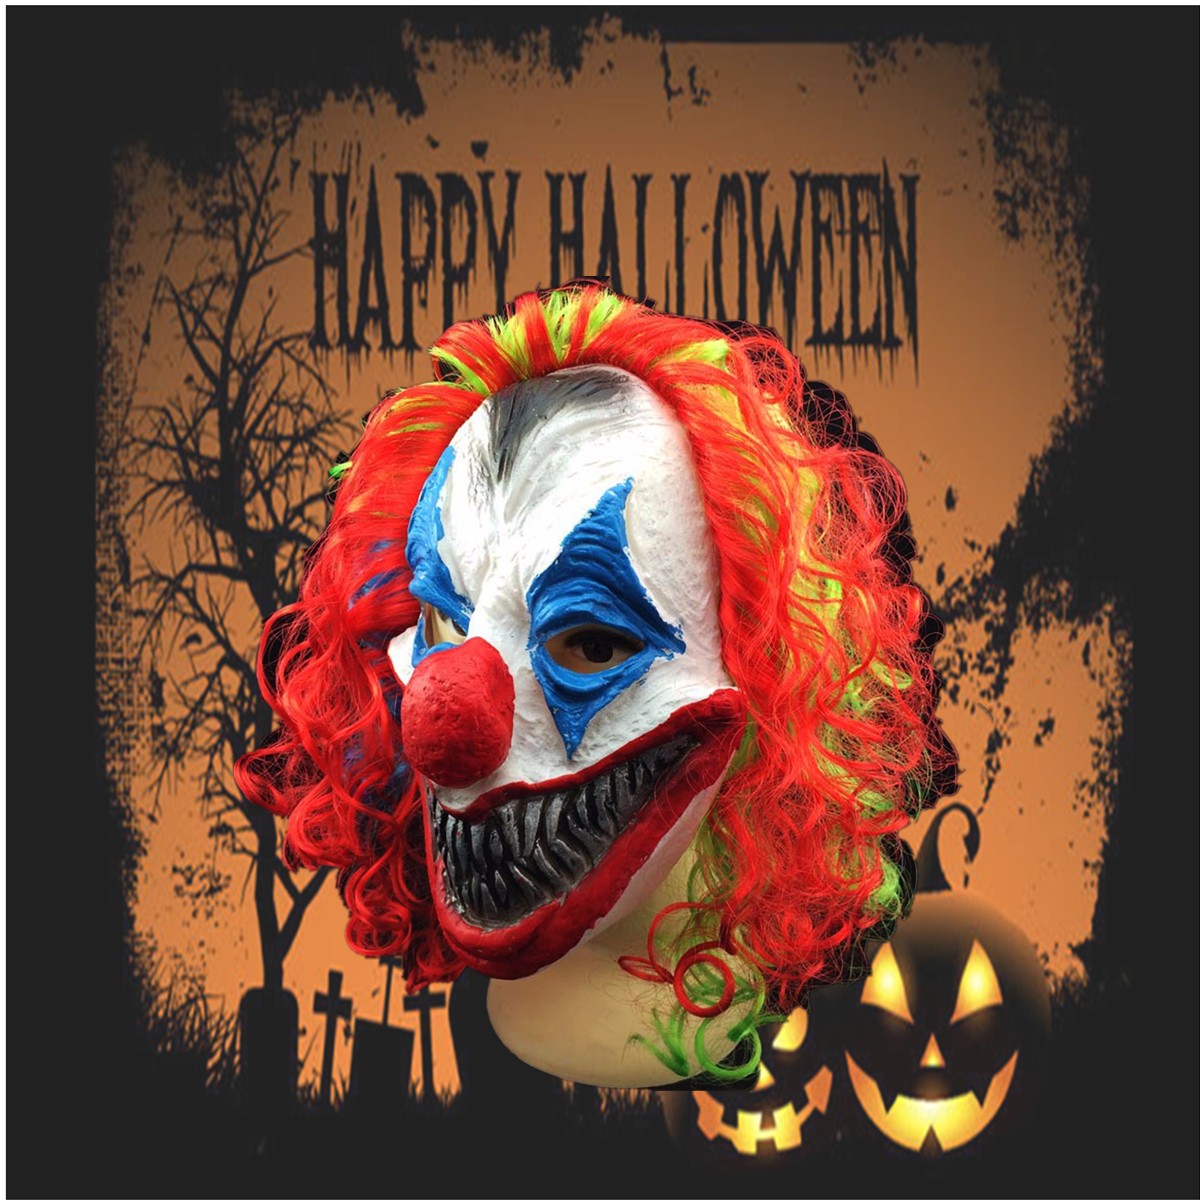 New Halloween Mask Creepy Clown Head Adult Costume Party Fancy Prop Random Colo - Photo: 1